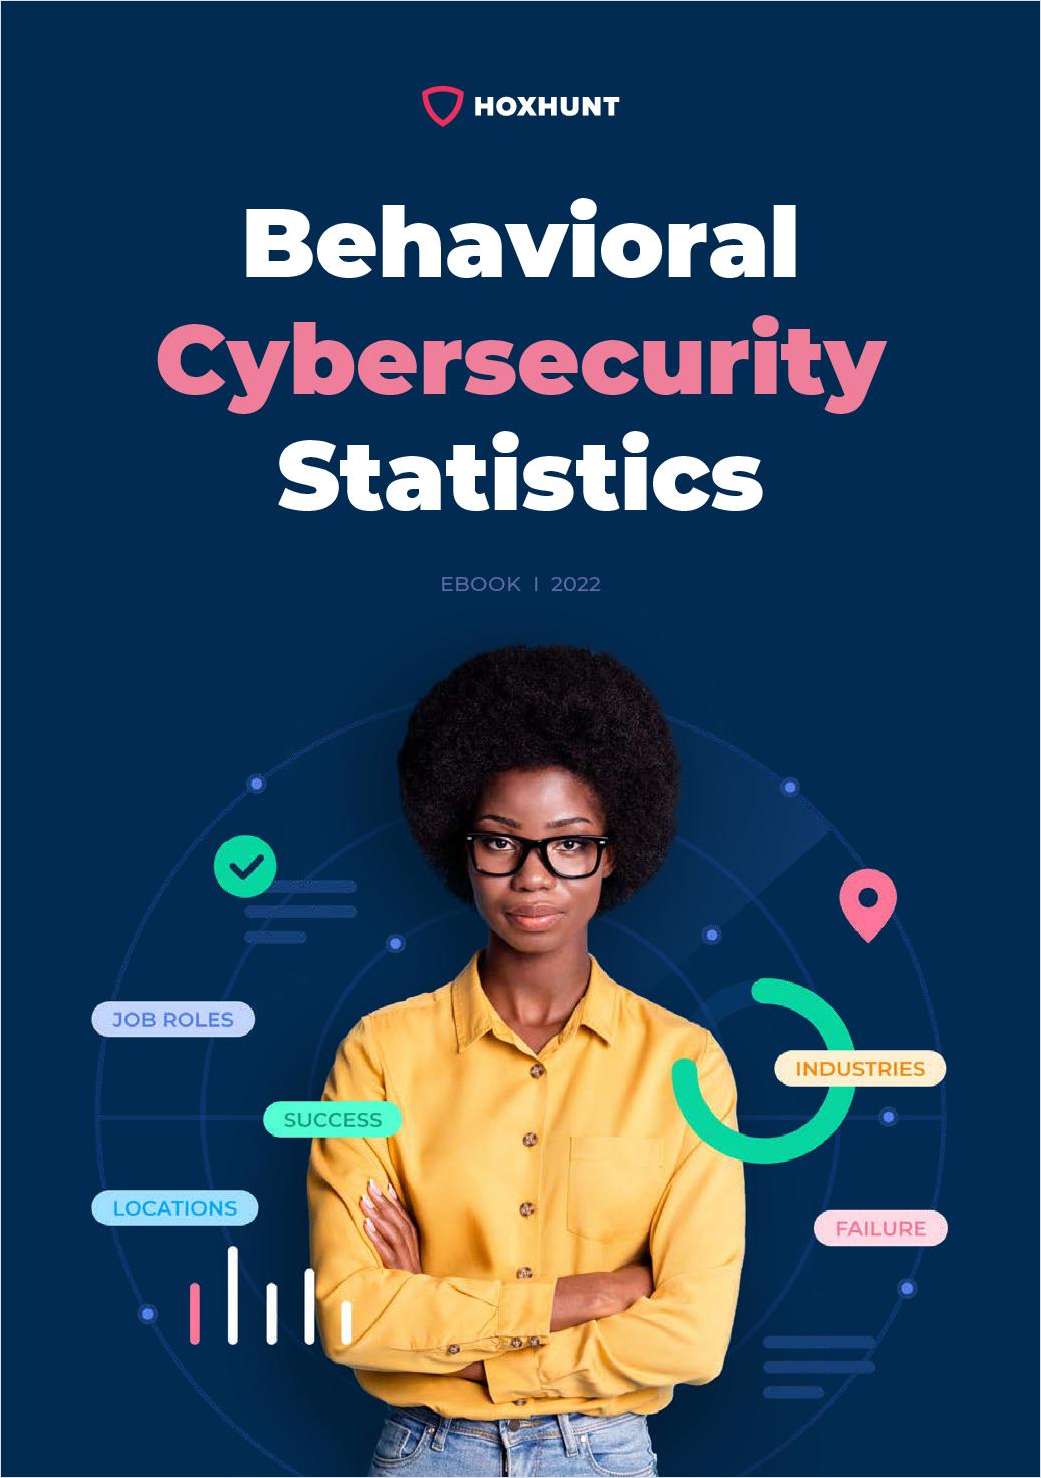 Behavioral Cybersecurity Statistics